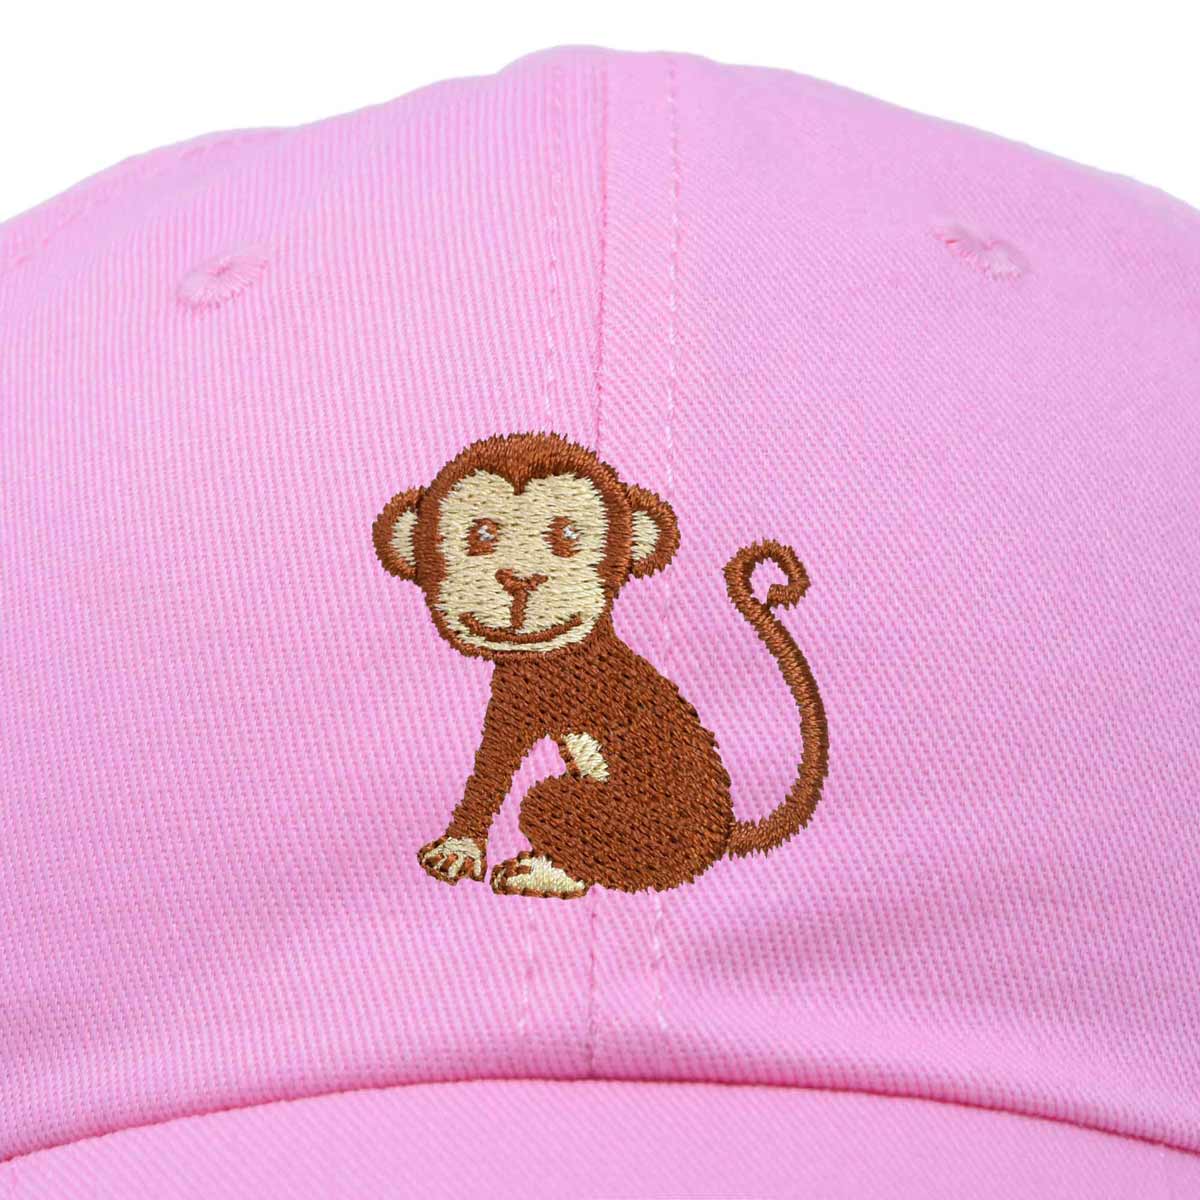 Dalix Cute Monkey Hat